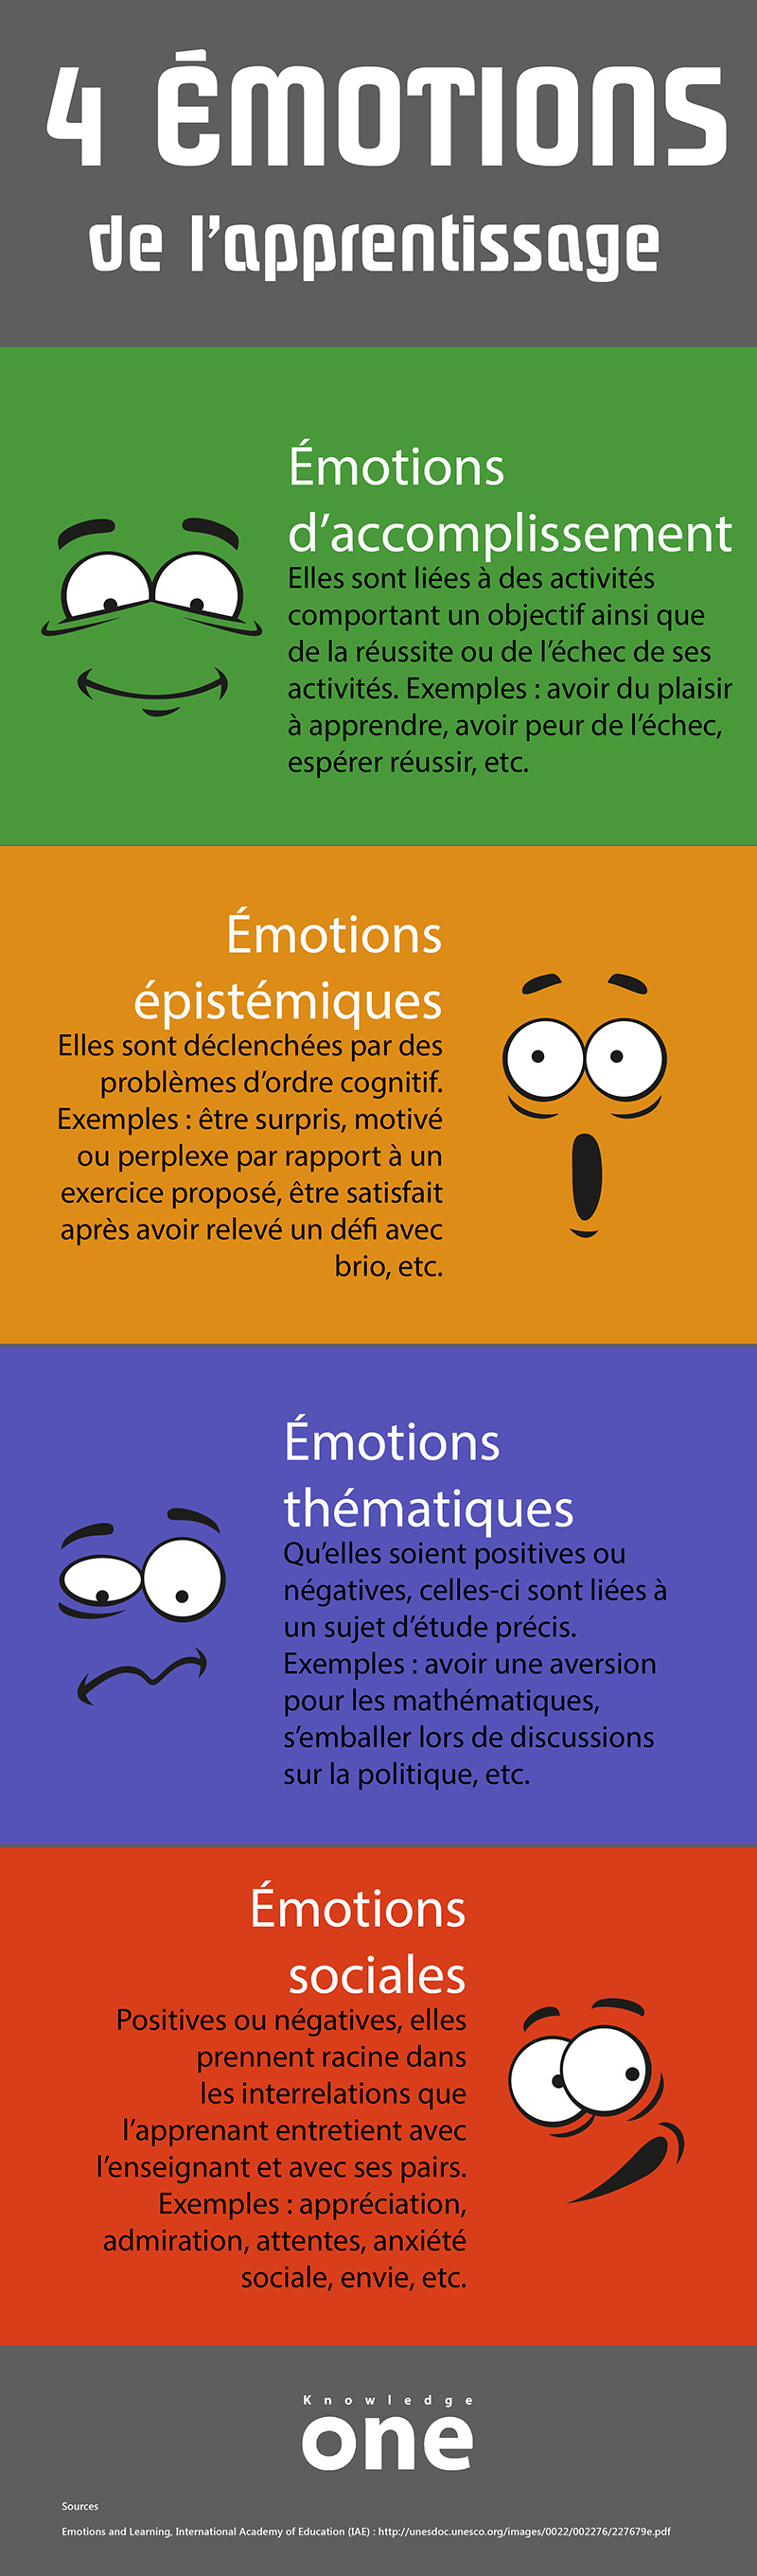 4 emotionsFR